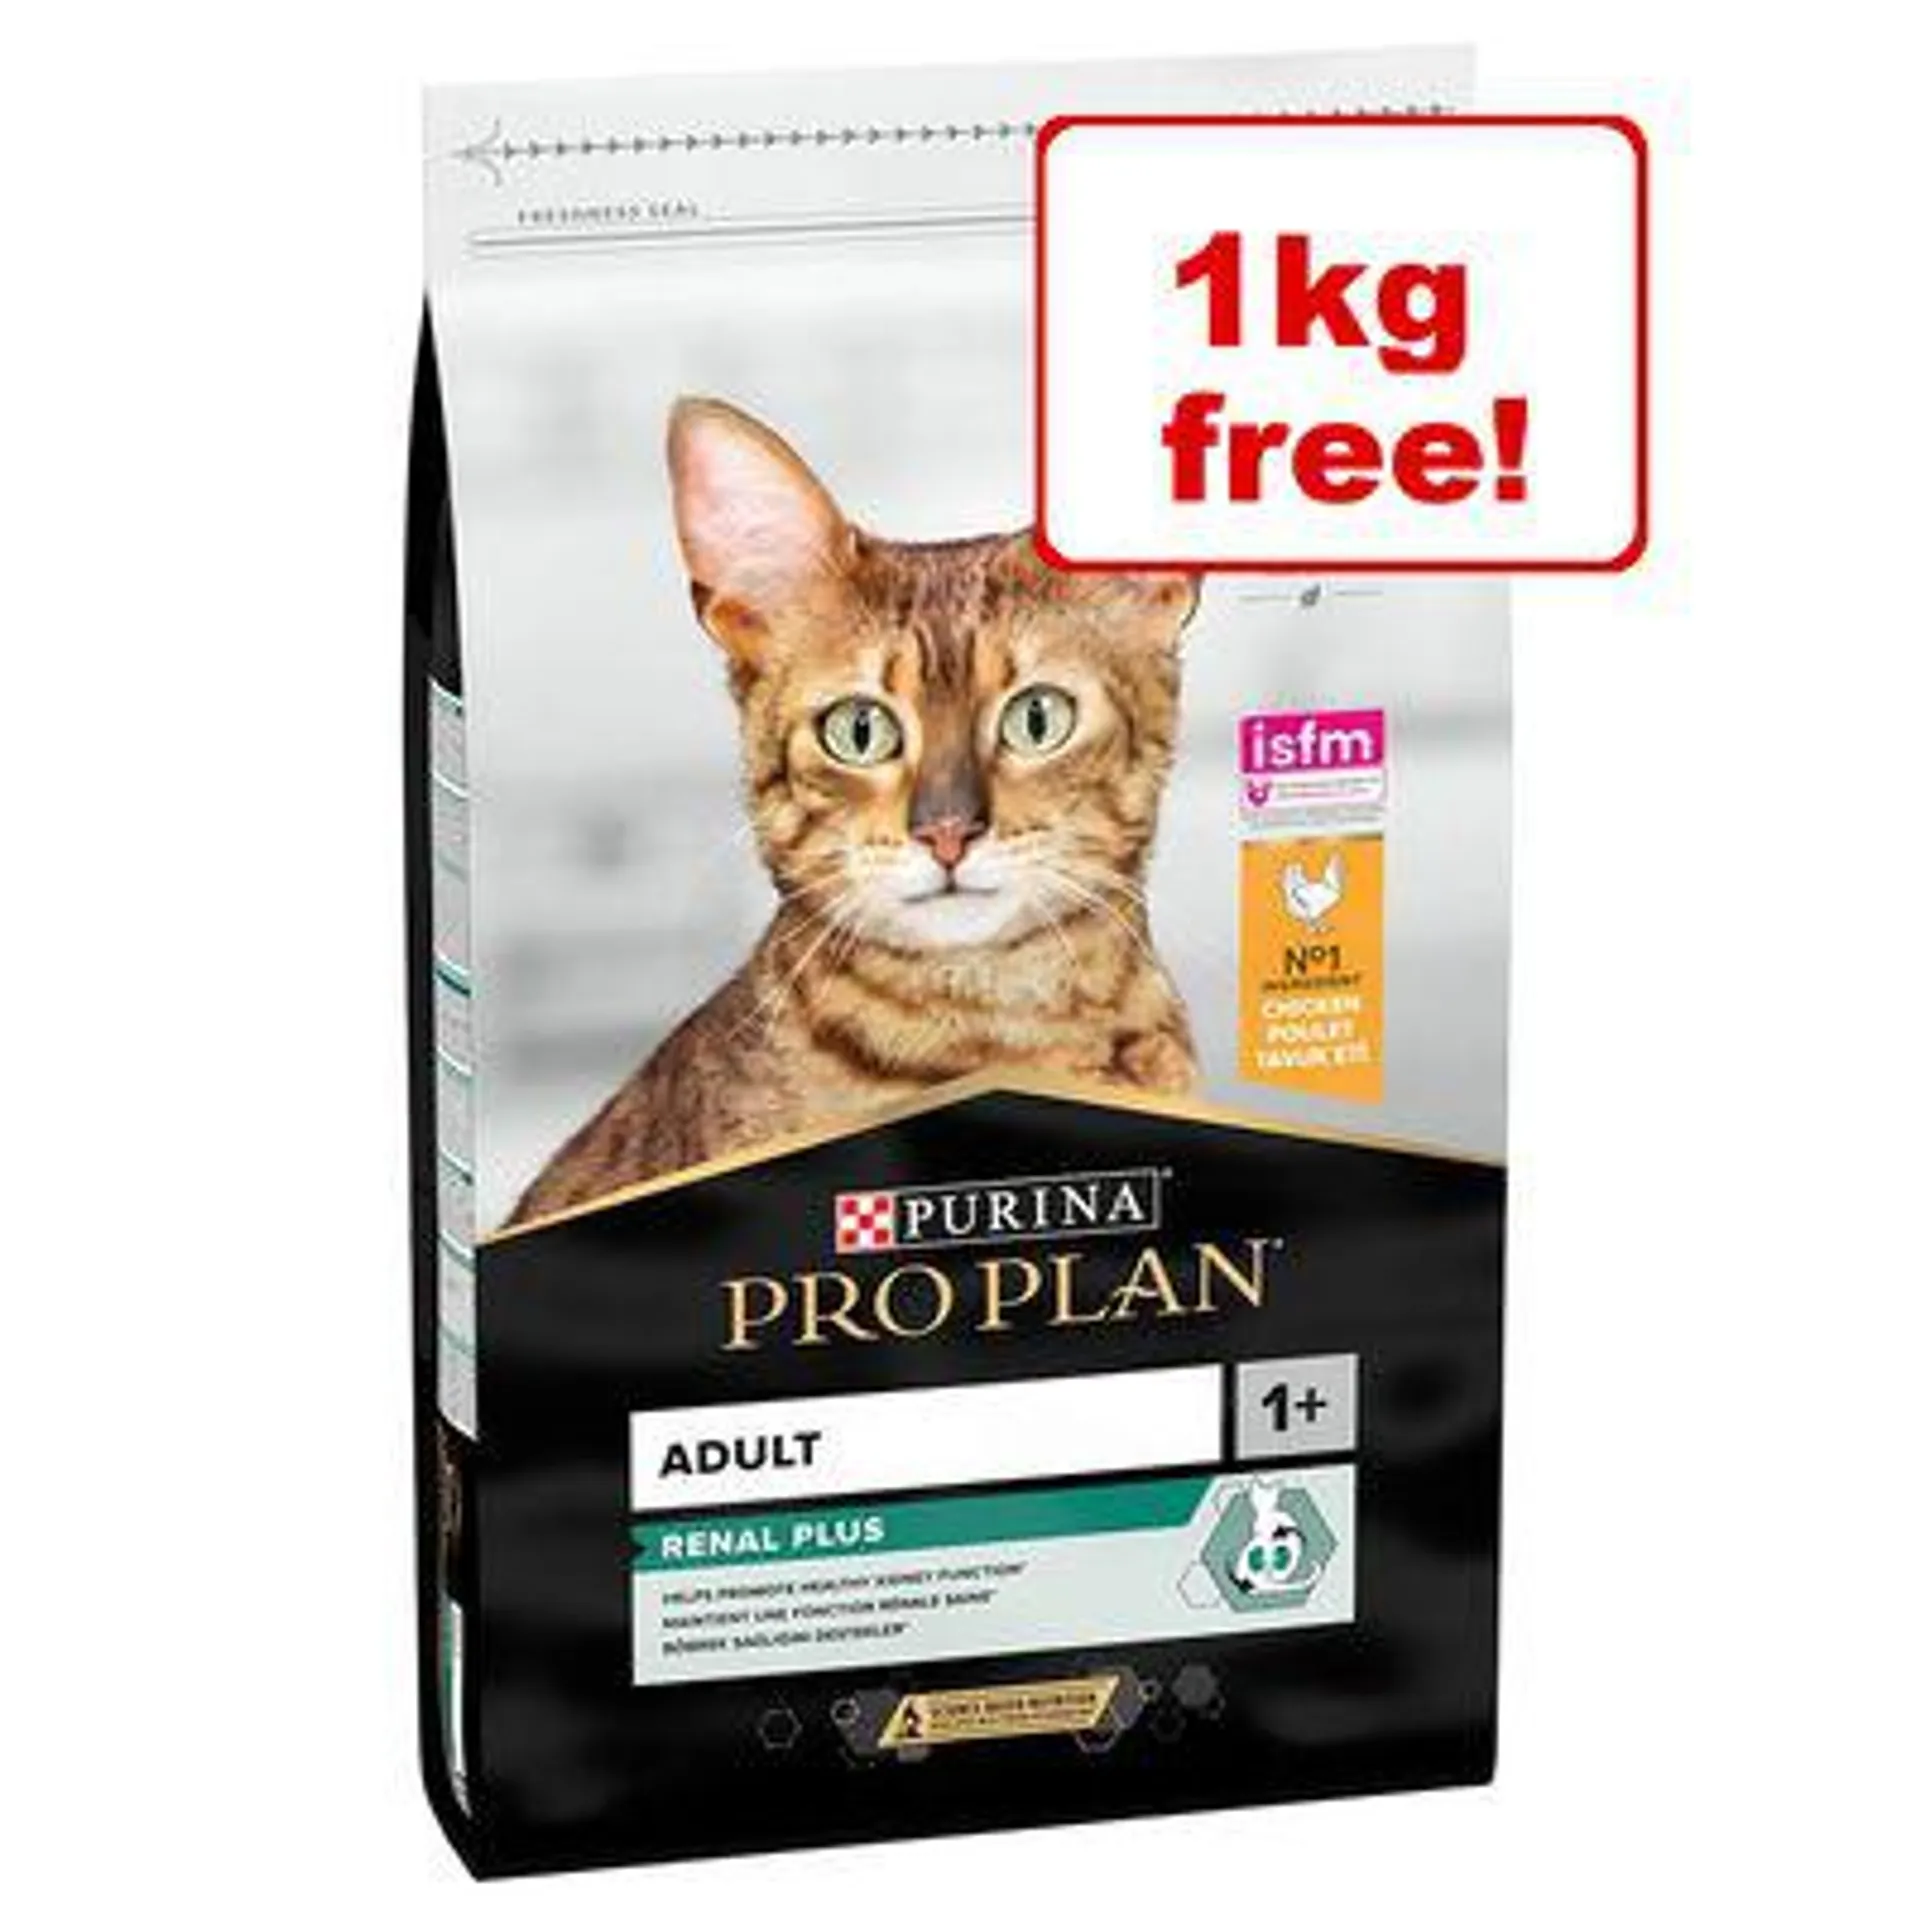 10kg PURINA PRO PLAN Dry Cat Food - 9kg + 1kg Free! *